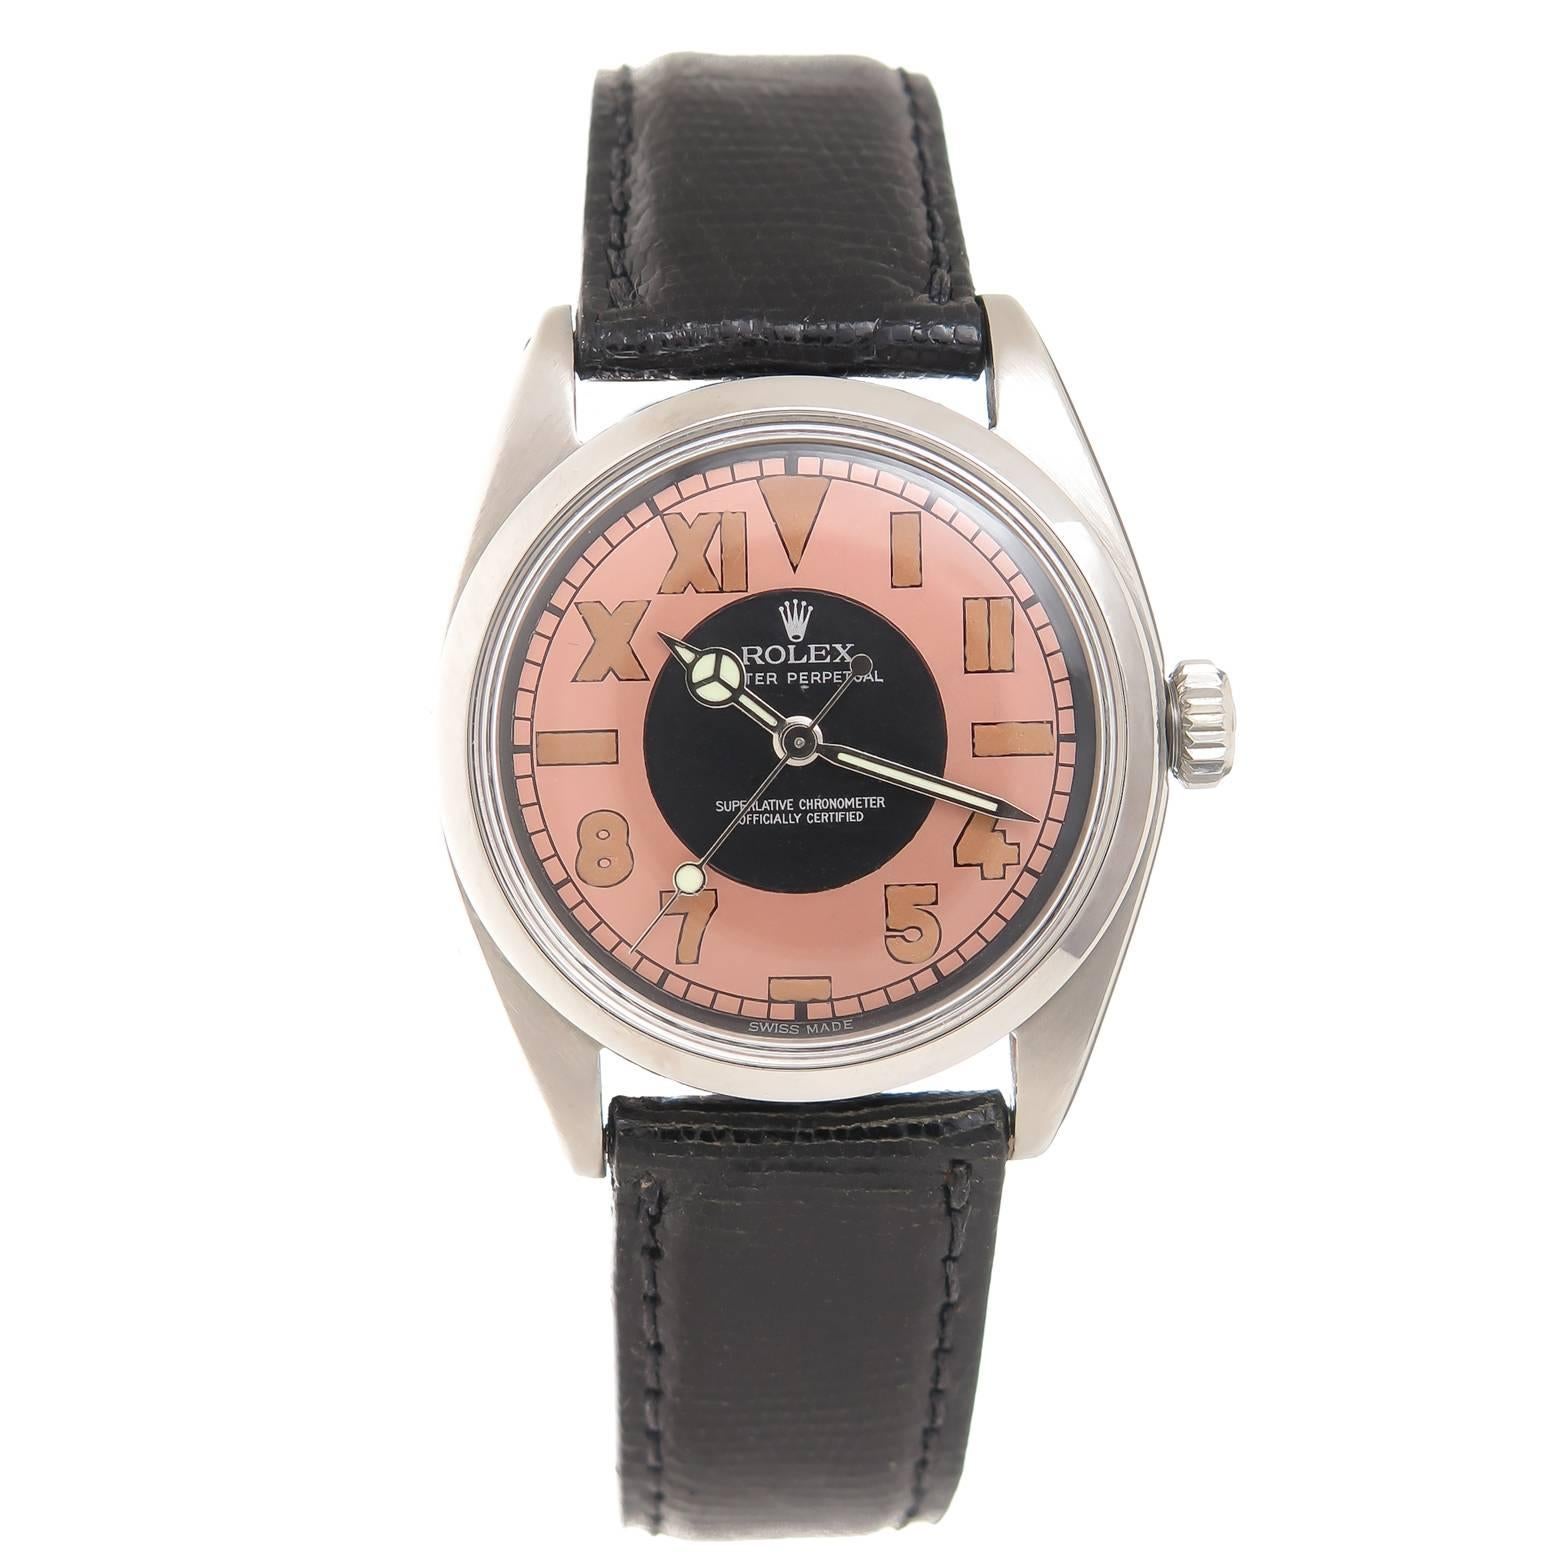 Rolex Stainless Steel California Dial Wristwatch Ref 6426